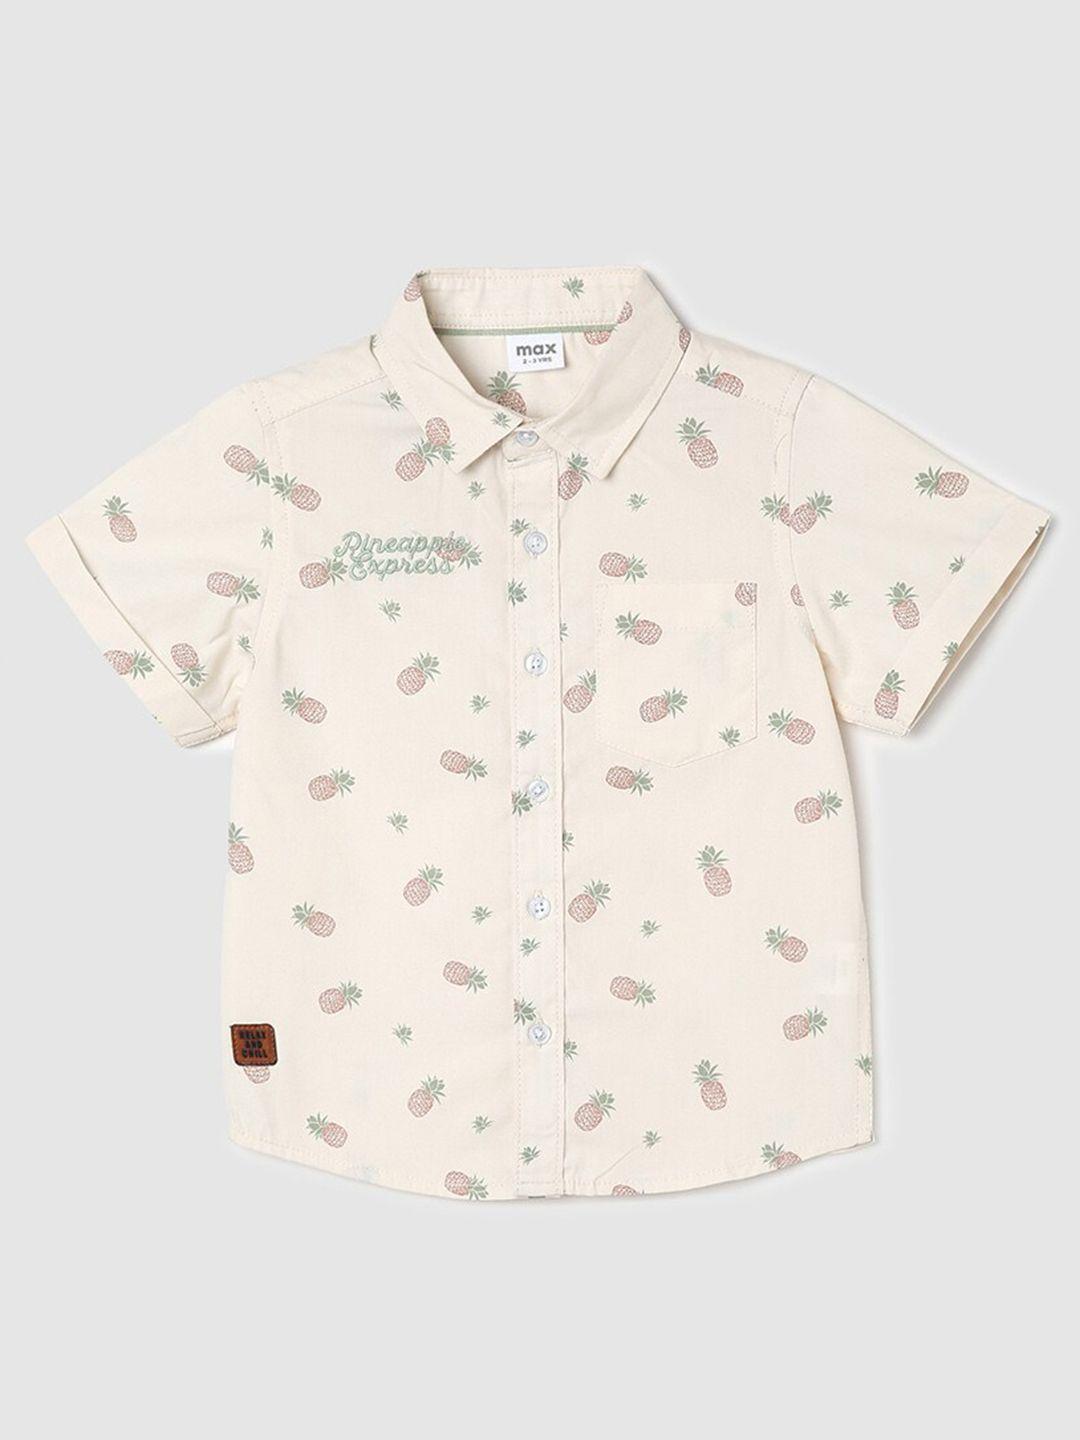 max boys conversational printed pure cotton casual shirt